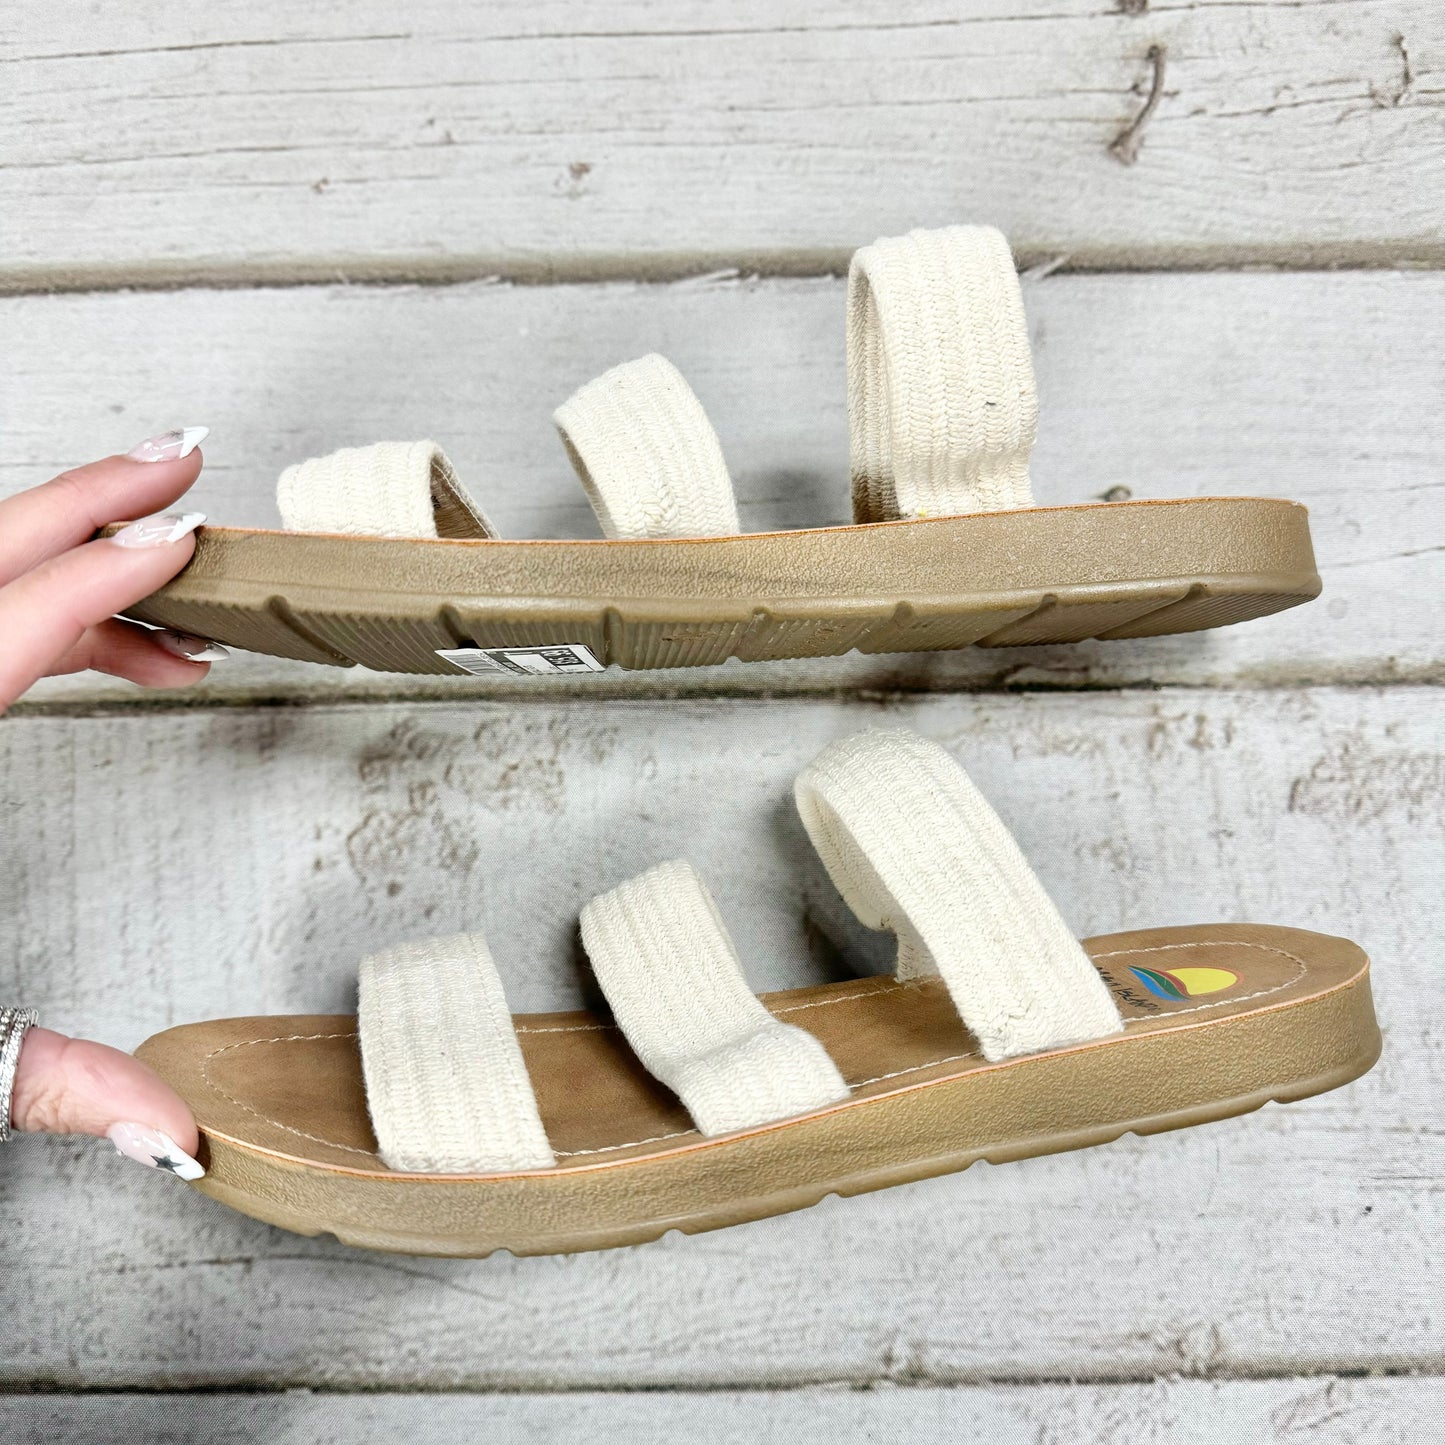 Sandals Flats By Maui Island  Size: 9